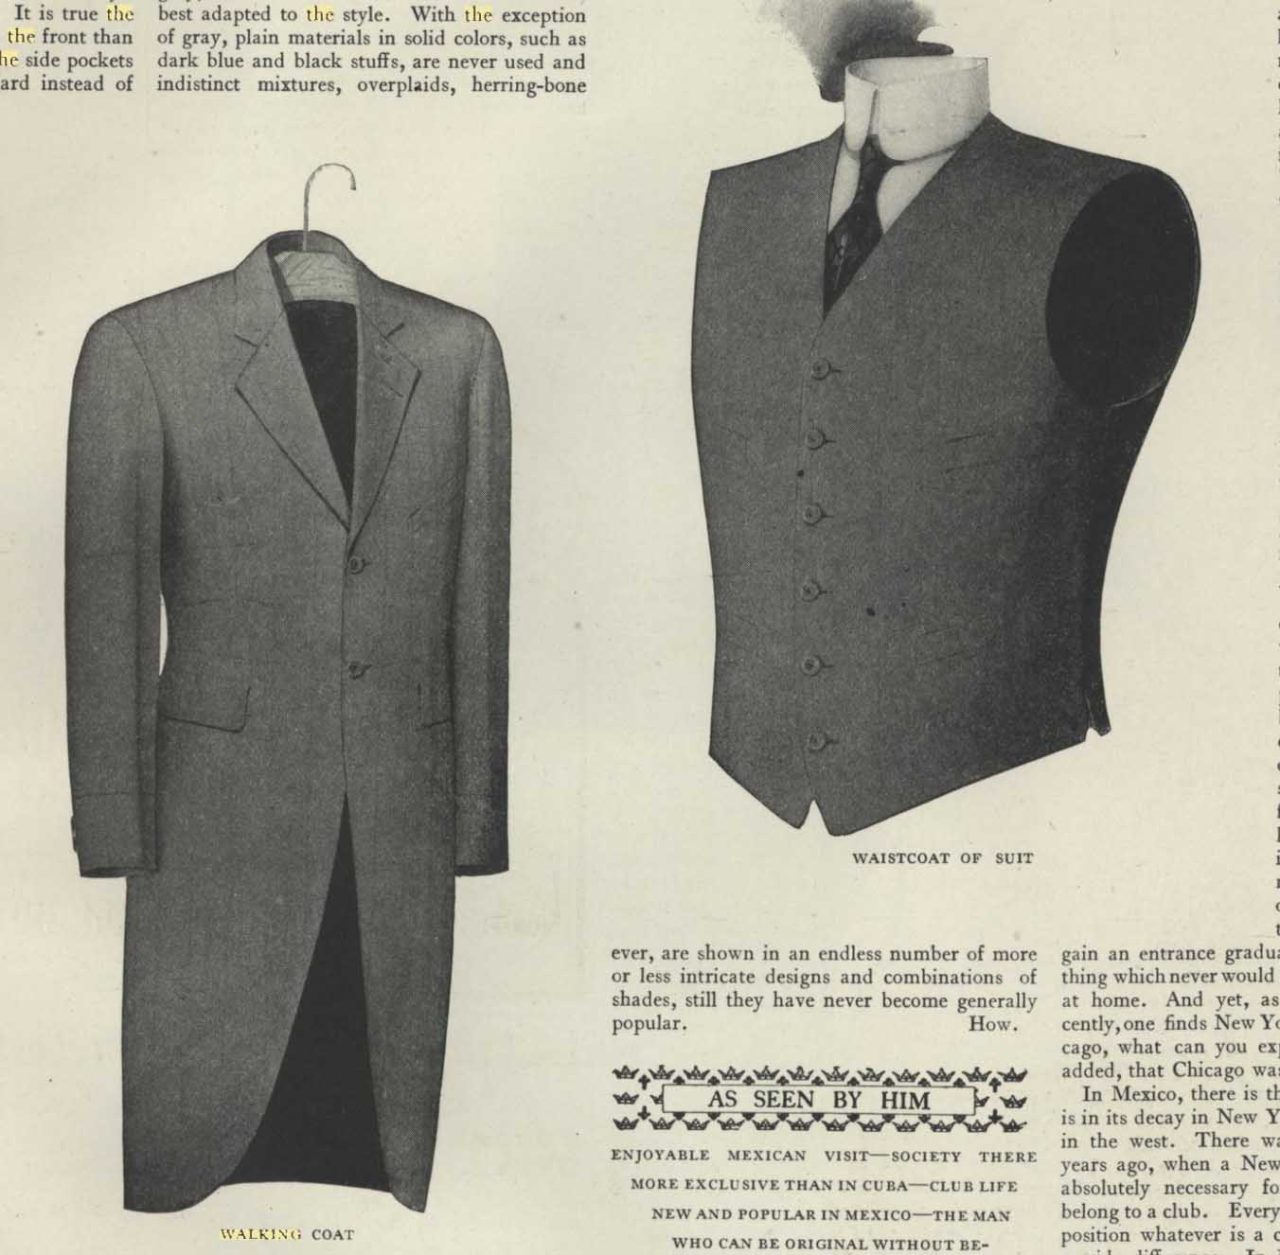 Fashion: The Well-Dressed Man (walking coat and waistcoat)